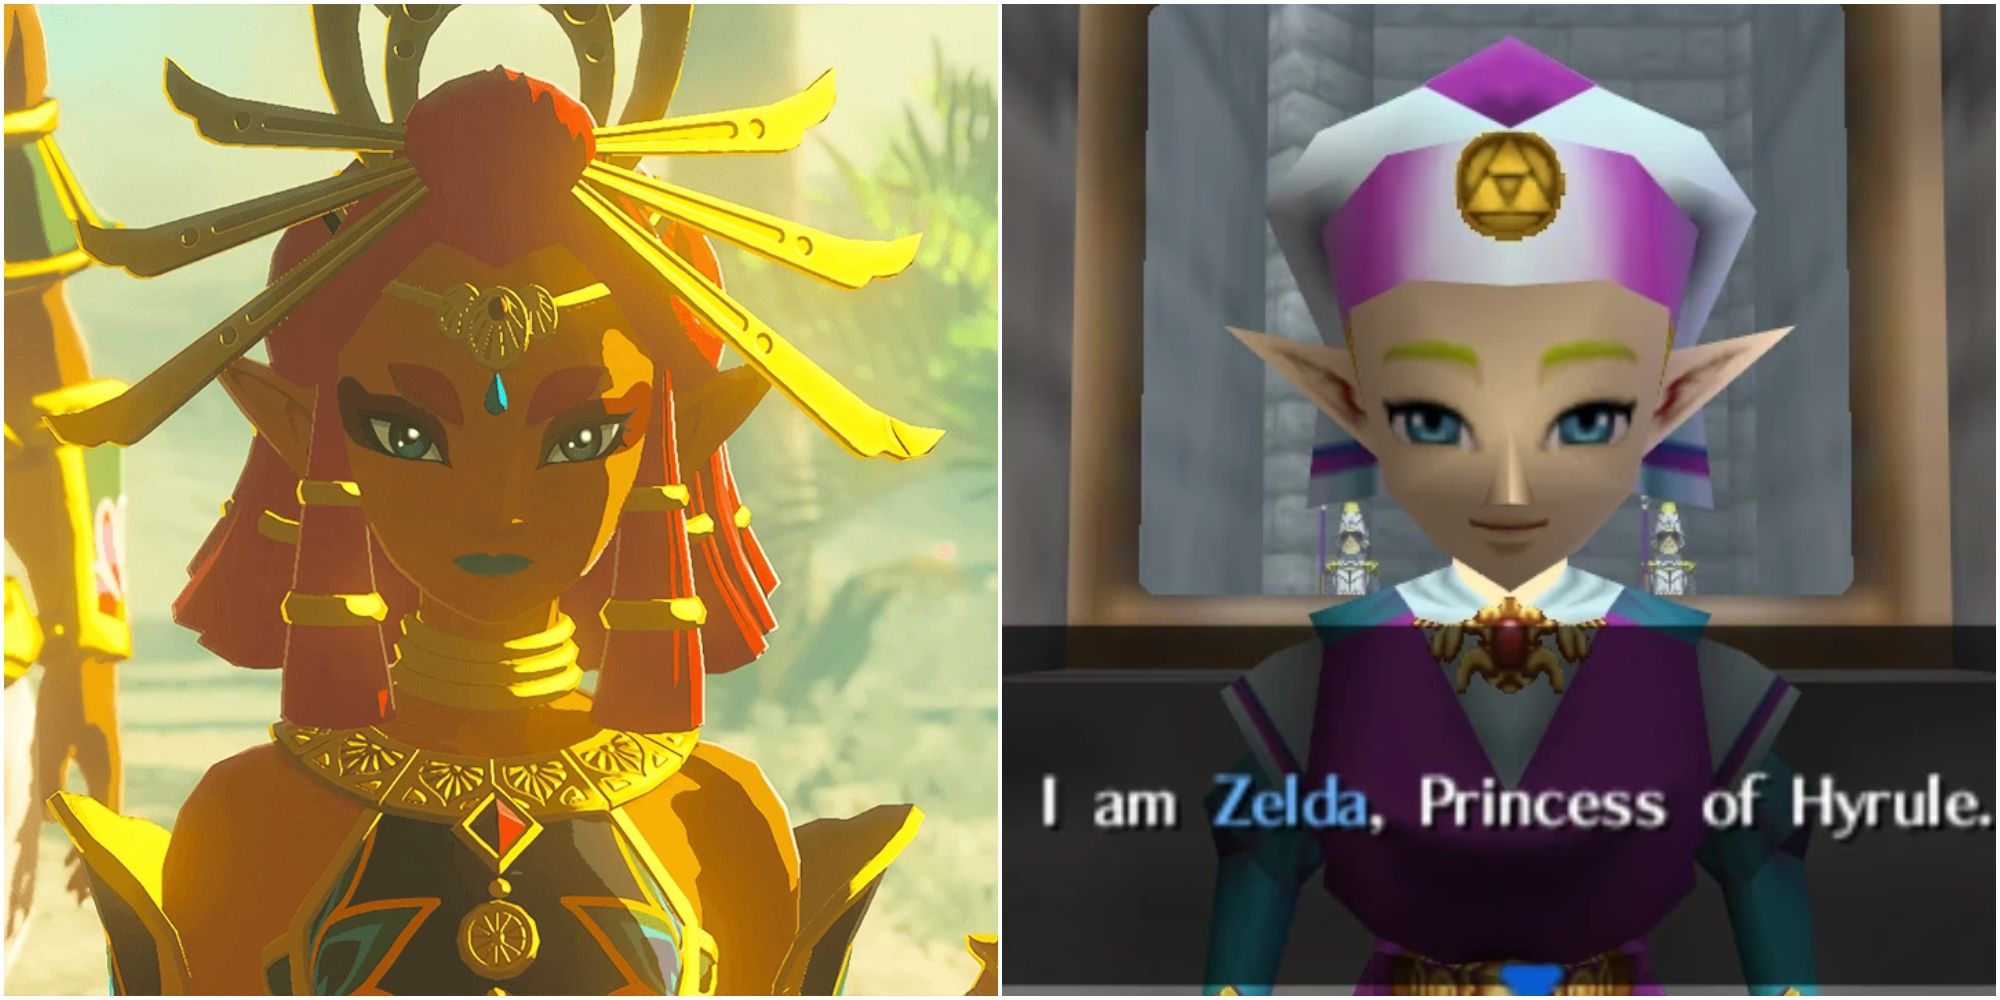 Riju from Tears of the Kingdom and Princess Zelda from Ocarina of Time, saying 'I am Zelda, Princess of Hyrule'